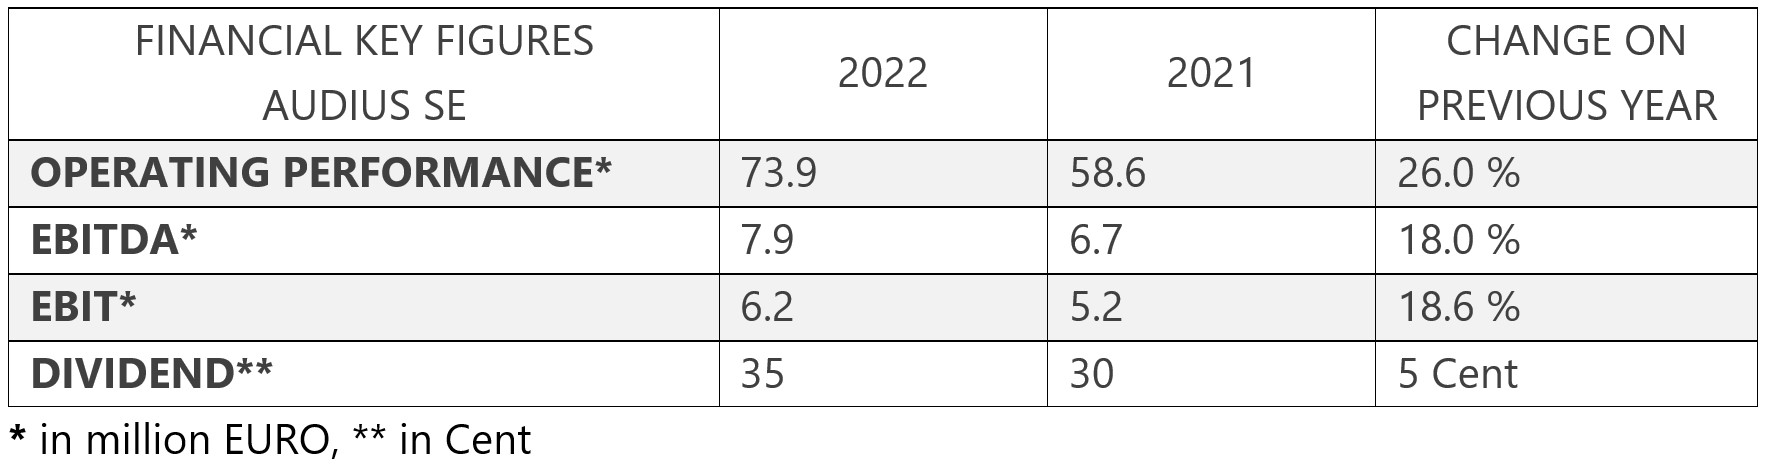 financial key figures 2022